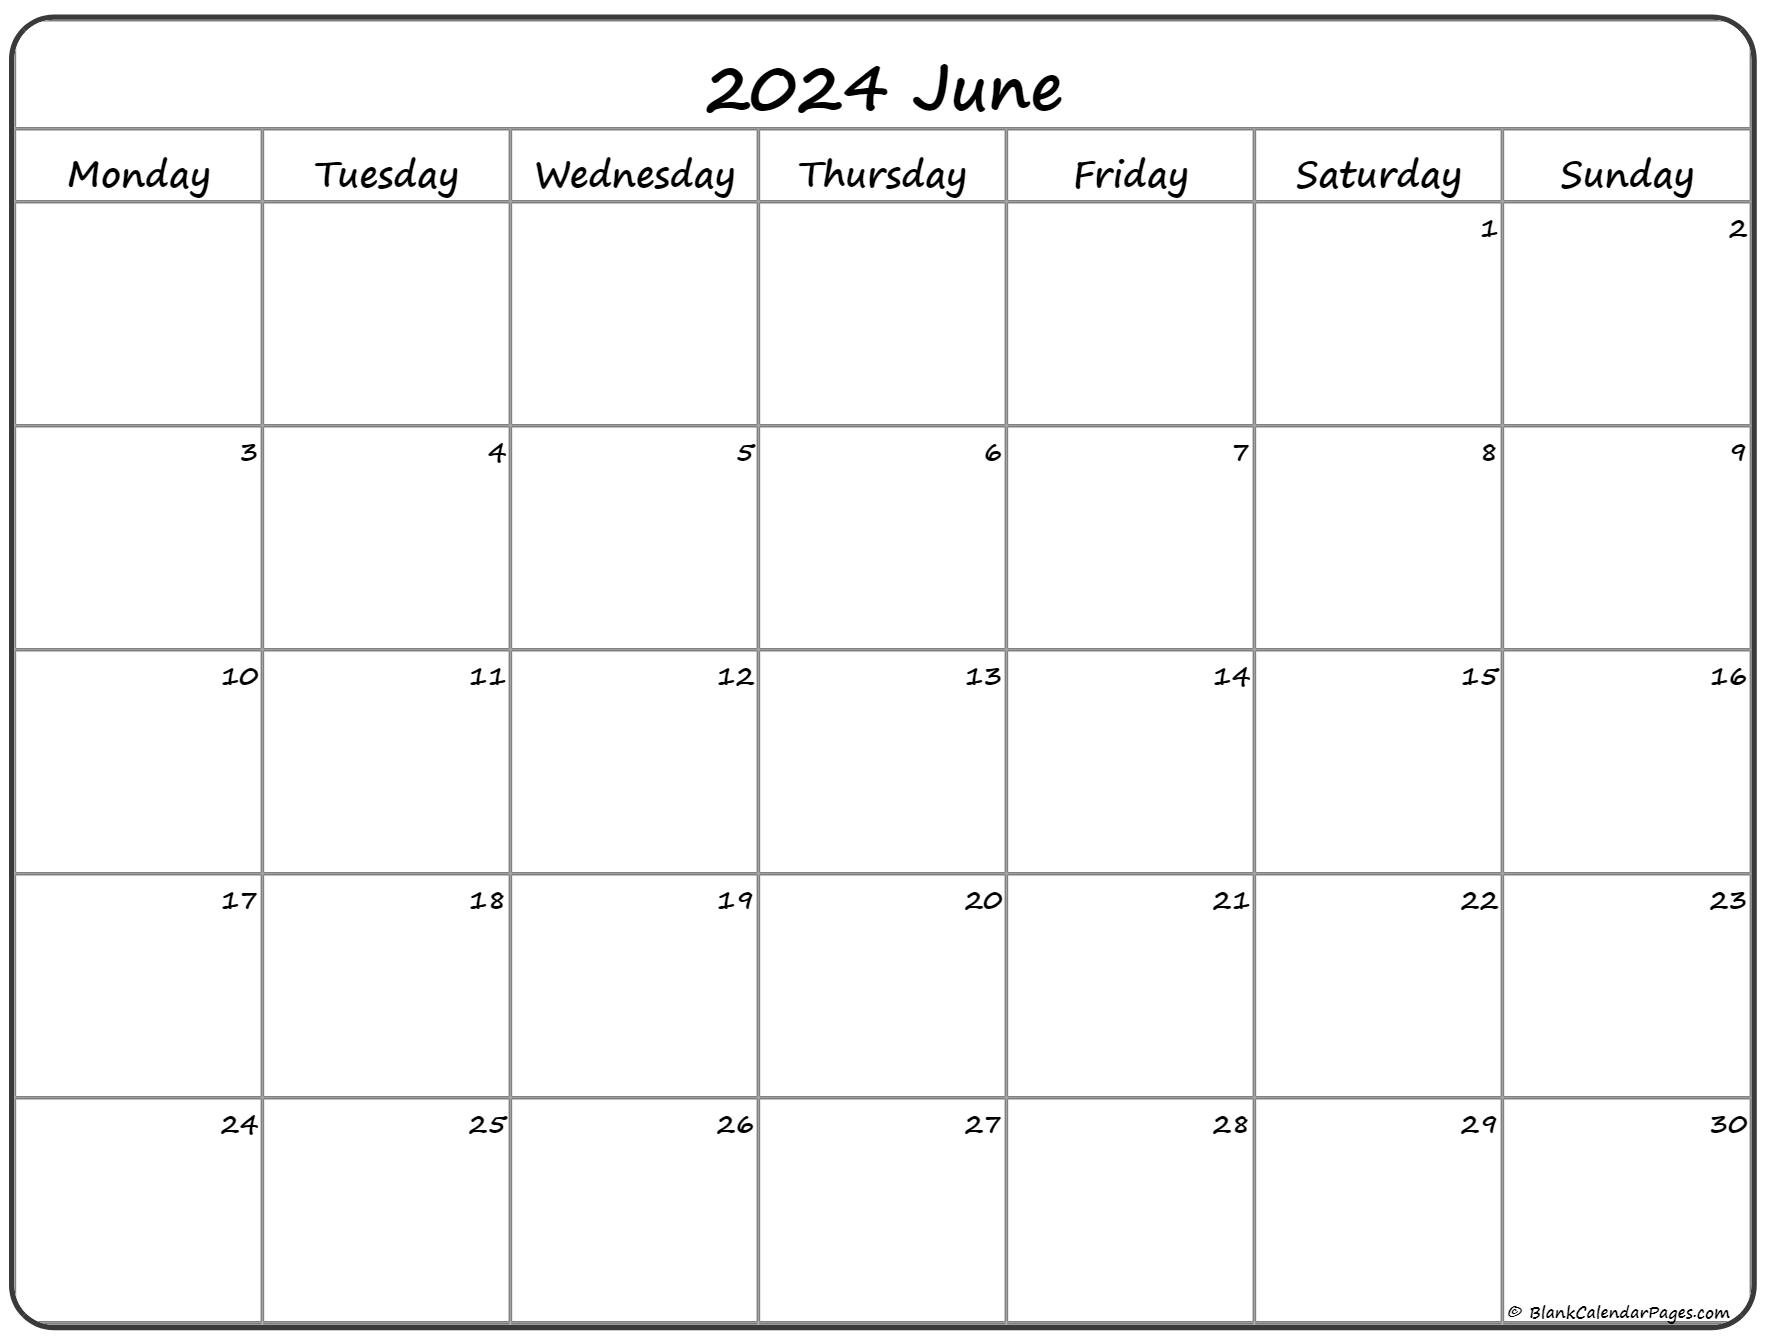 june-2023-monday-calendar-monday-to-sunday